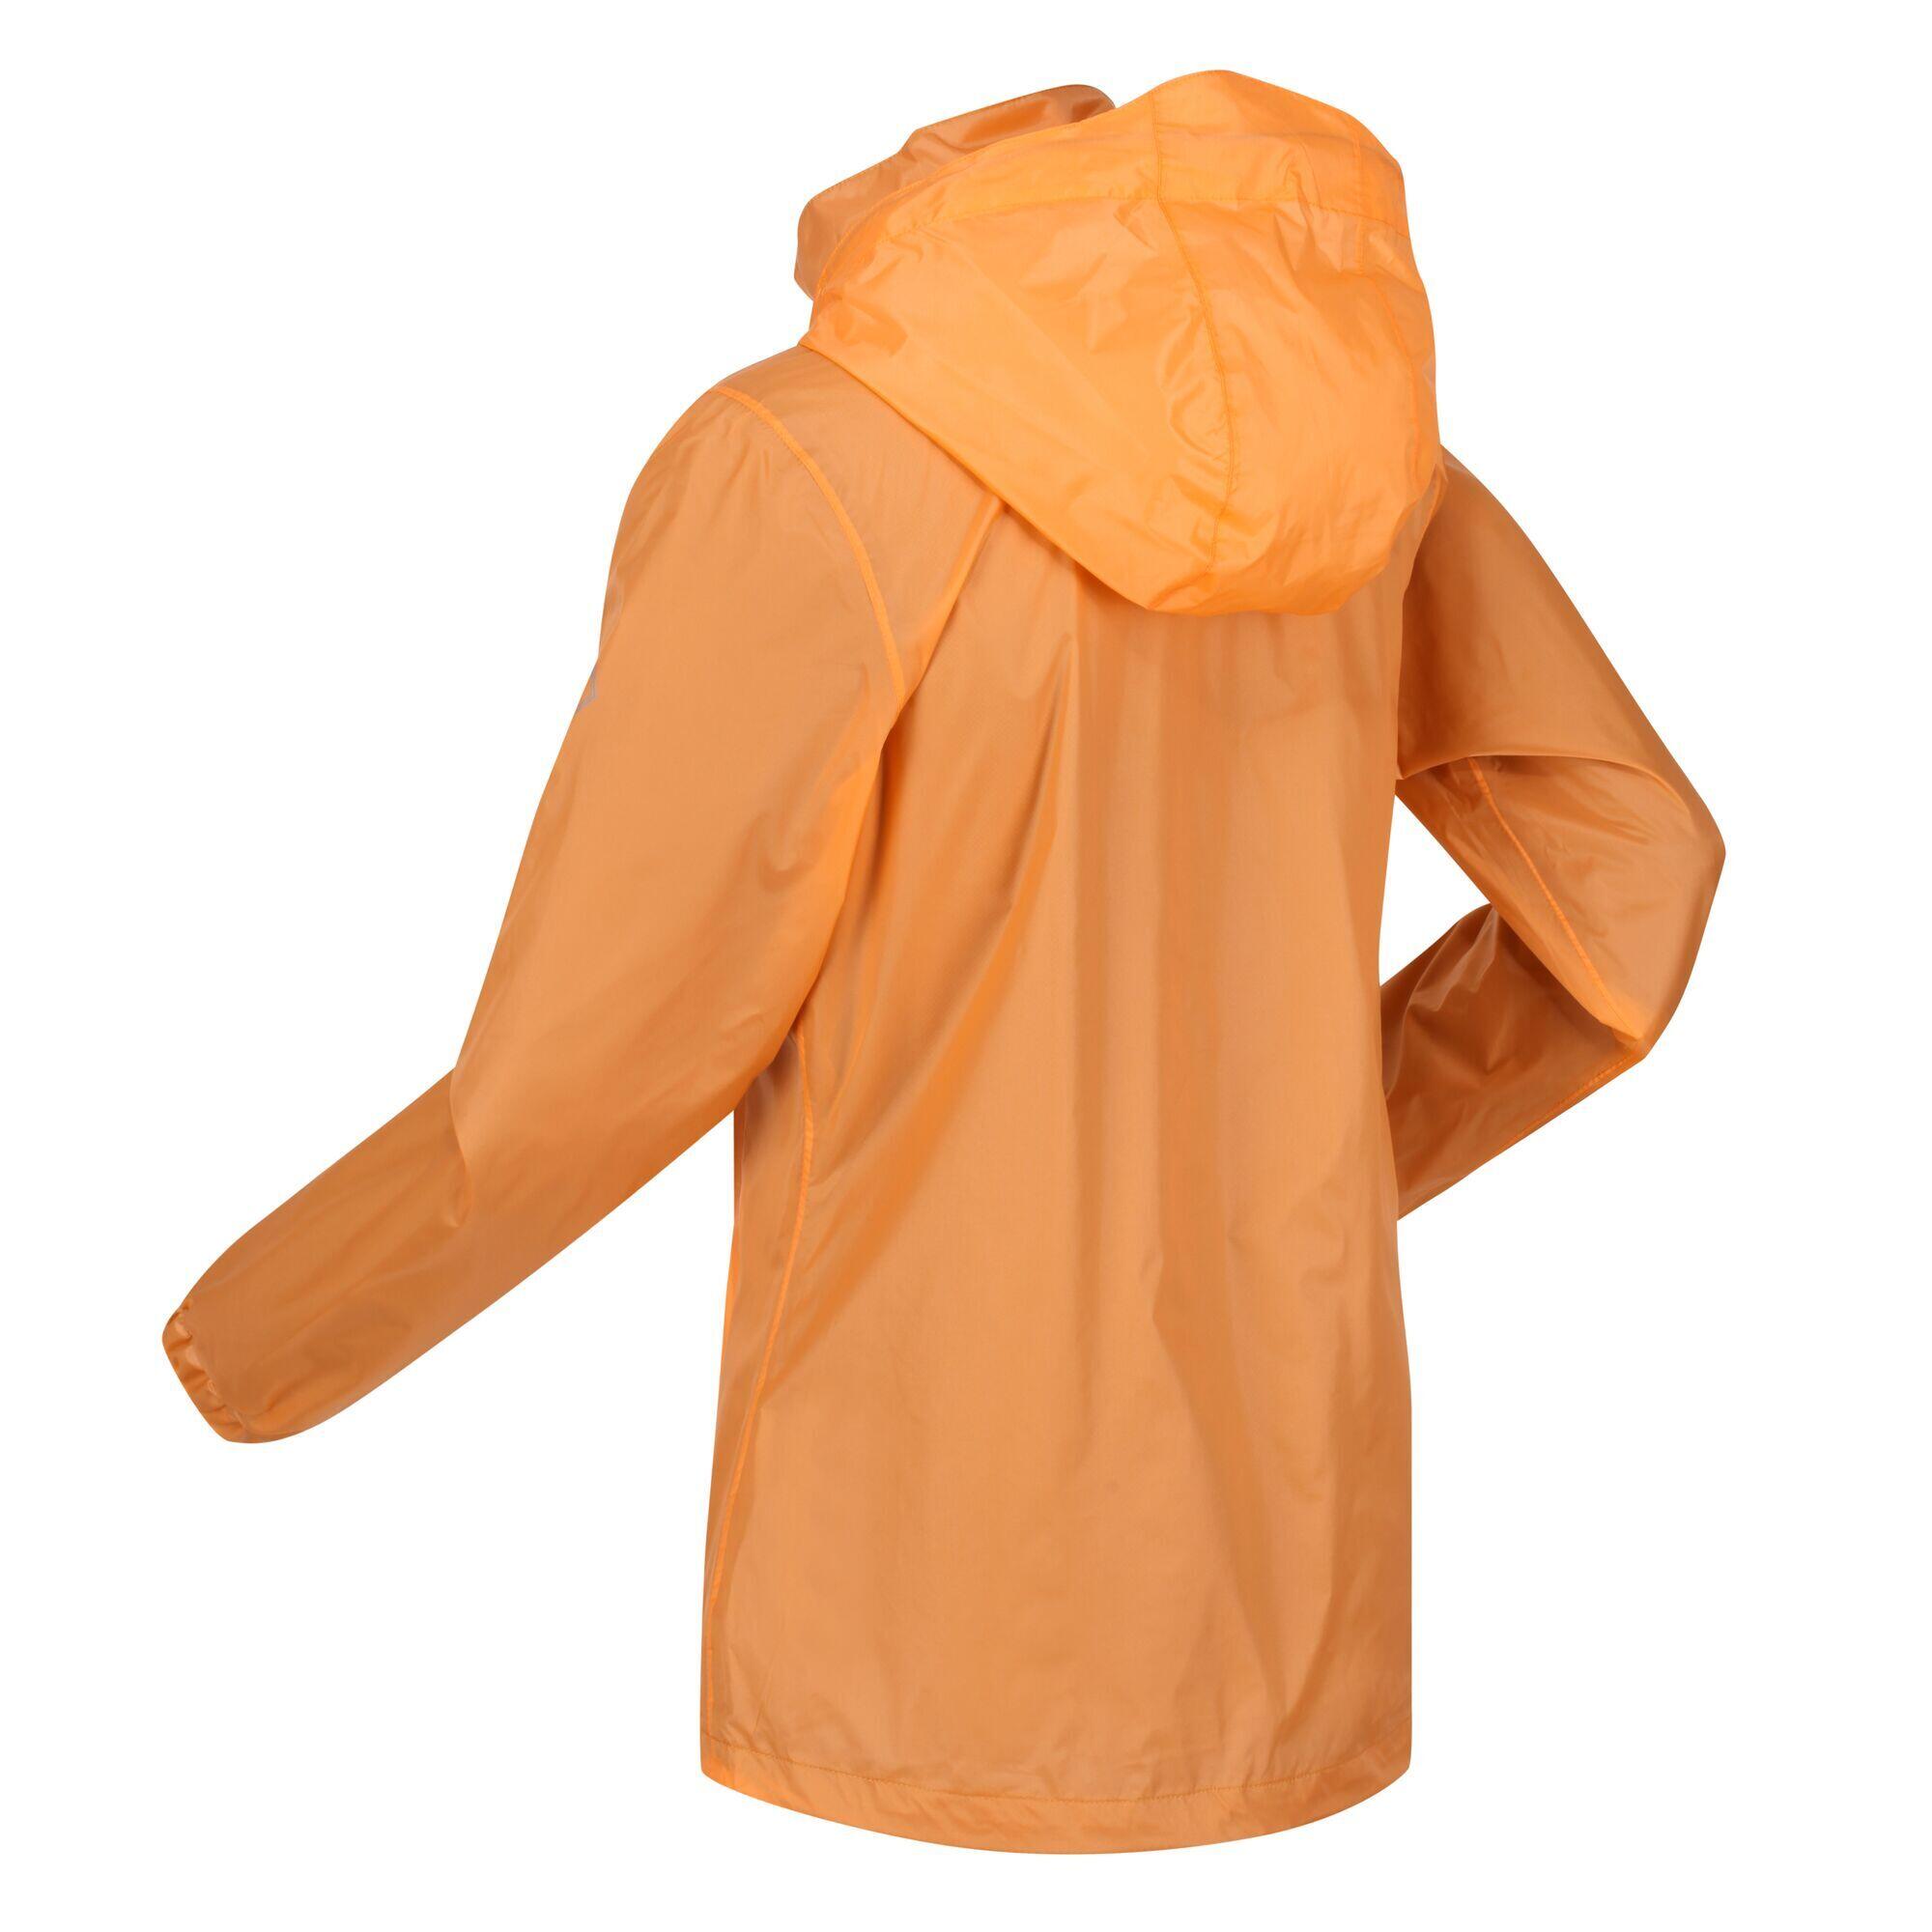 Corinne IV Women's Fitness Waterproof Rain Jacket - Light Orange 6/7